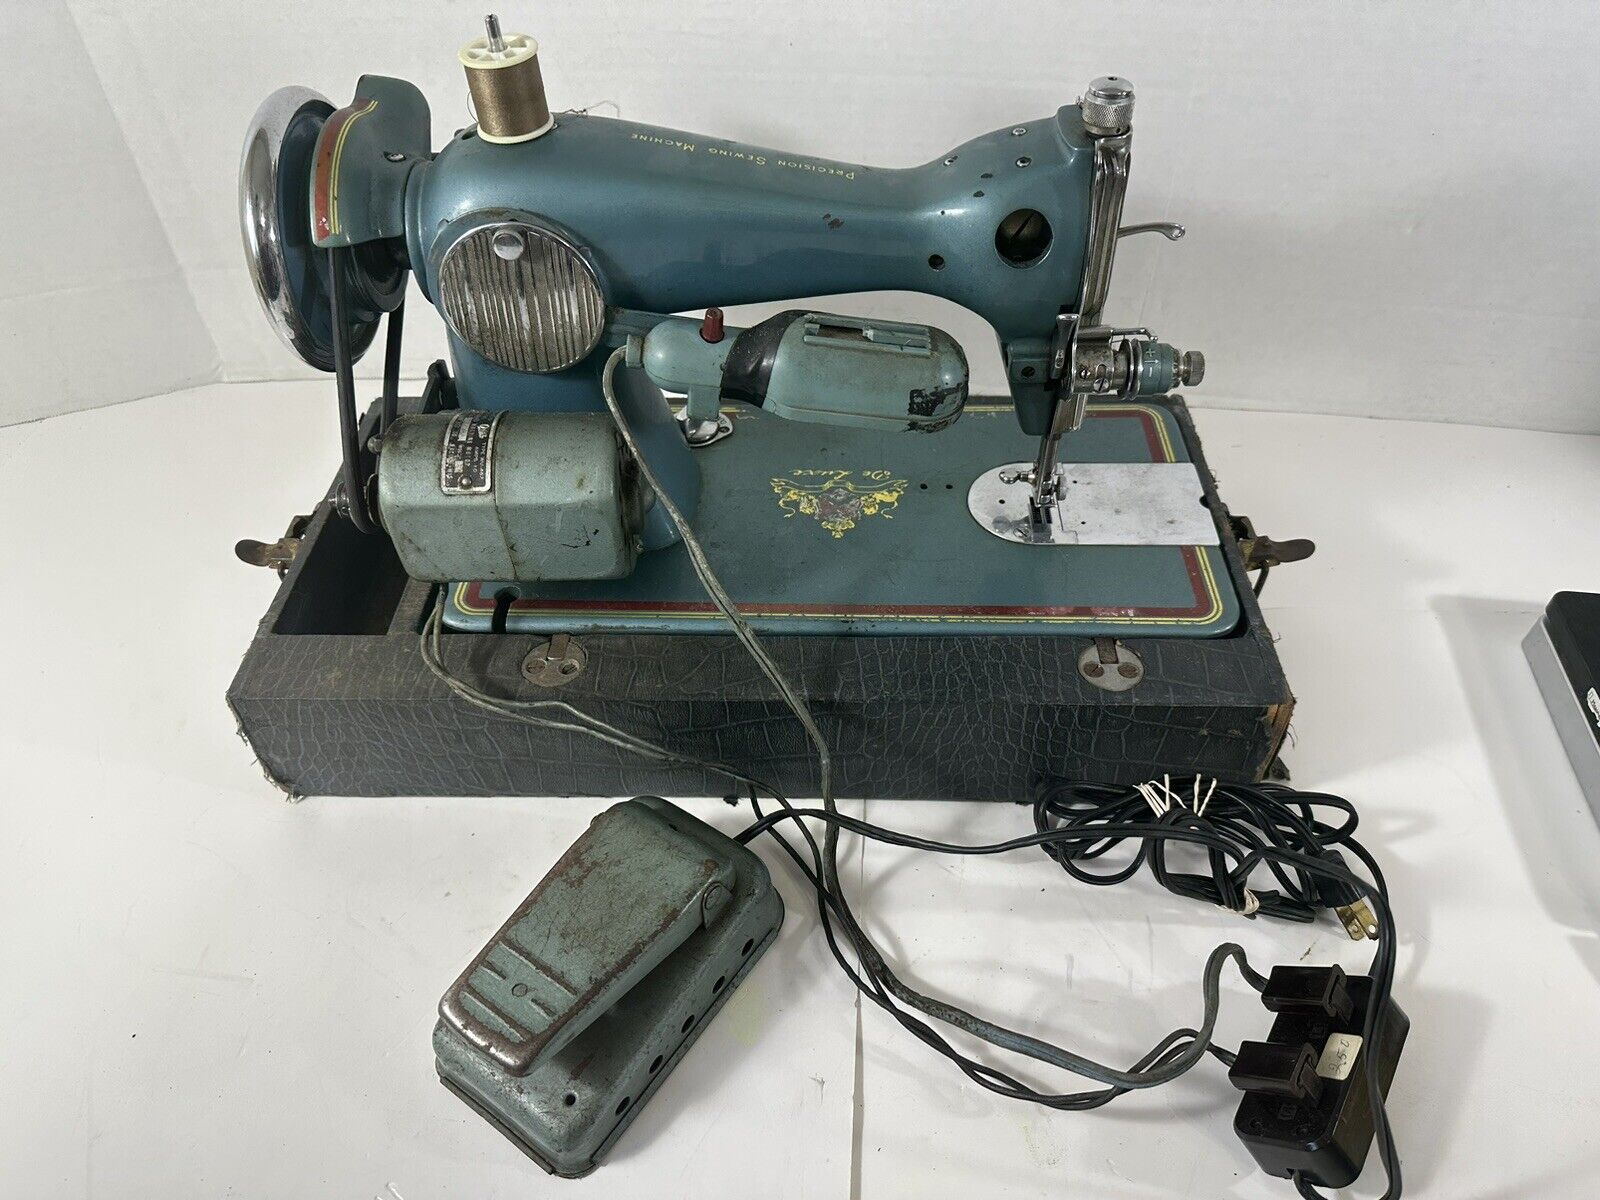 Vintage Super Deluxe Remington Precision Sewing Machine